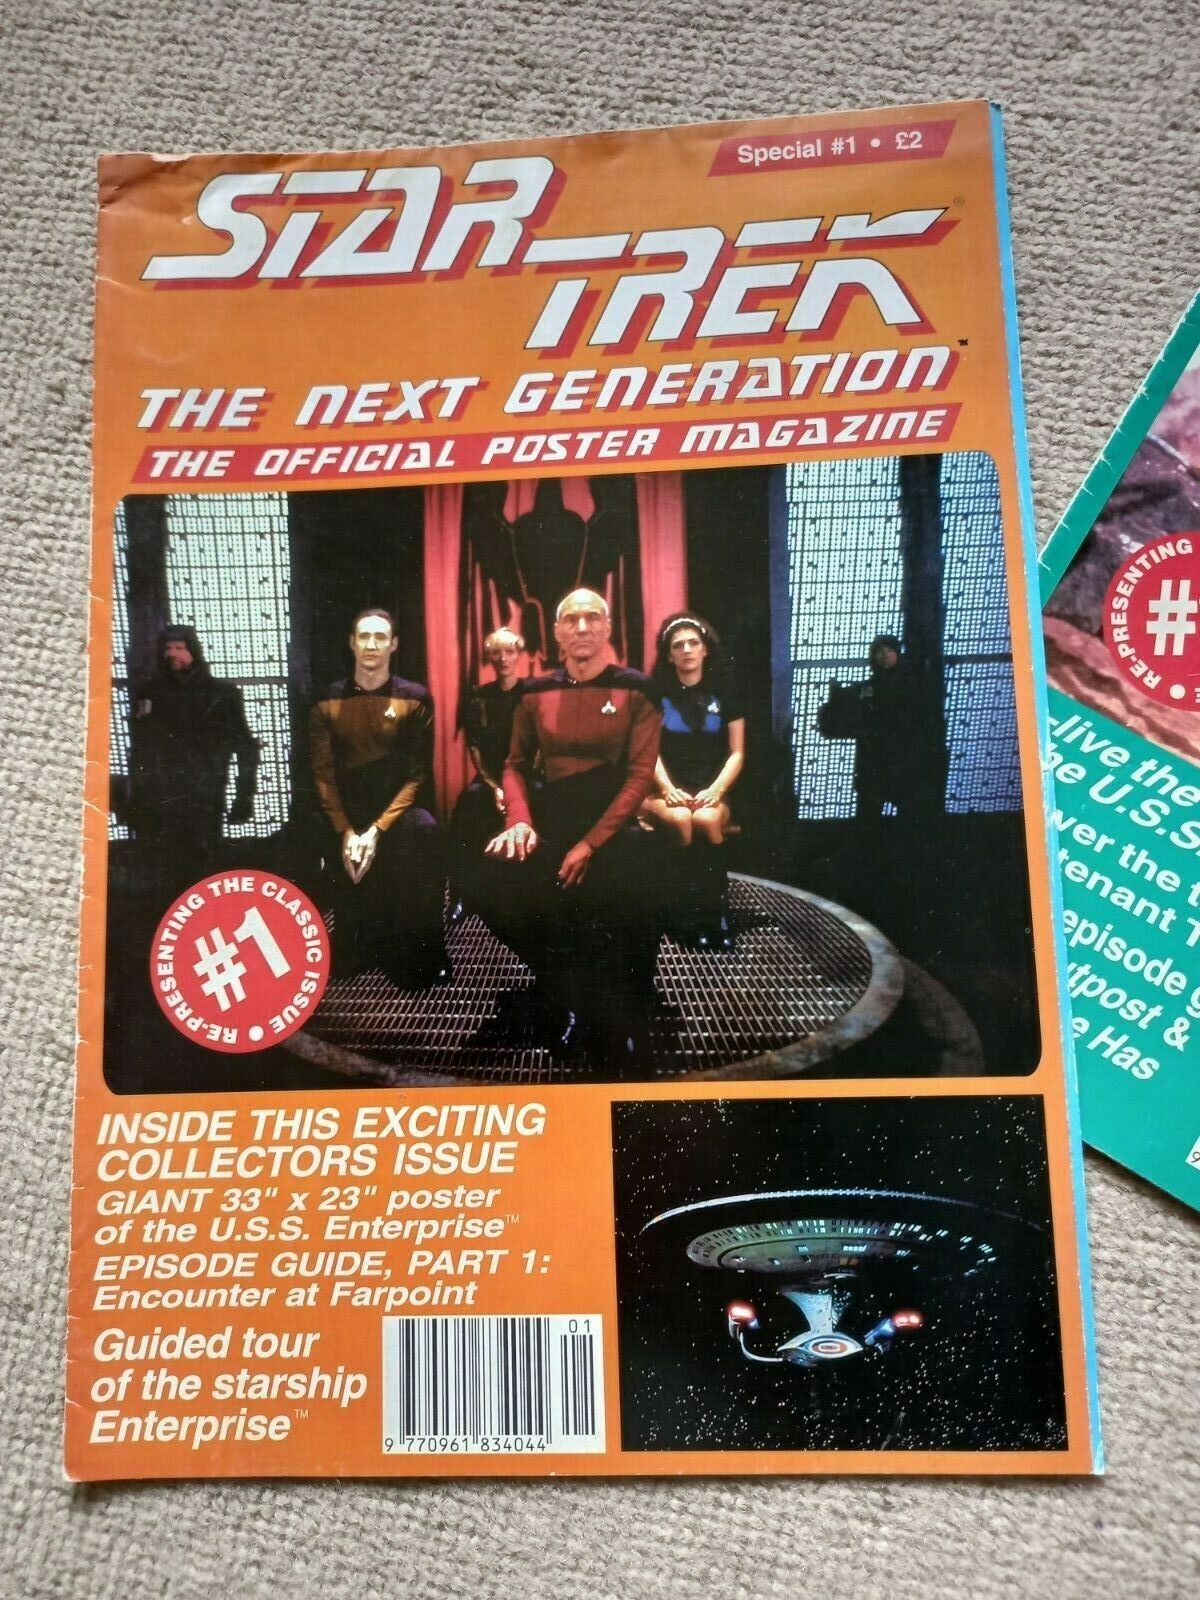 Star Trek: The Next Generation Poster Magazine Special #1